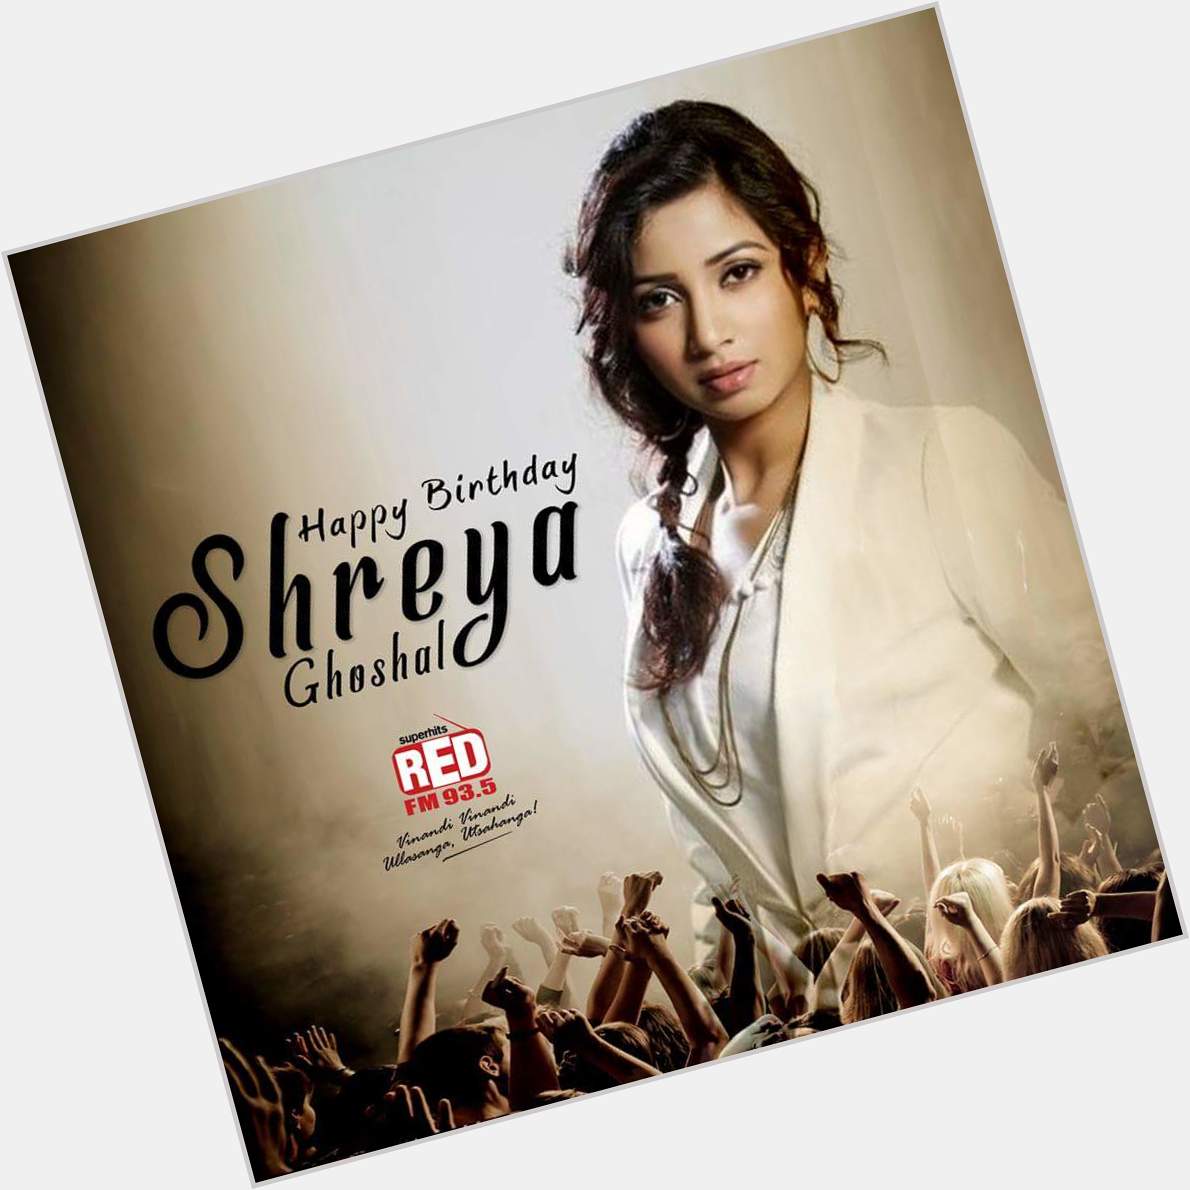 Happy birthday to my favourite singer shreya ghoshal 